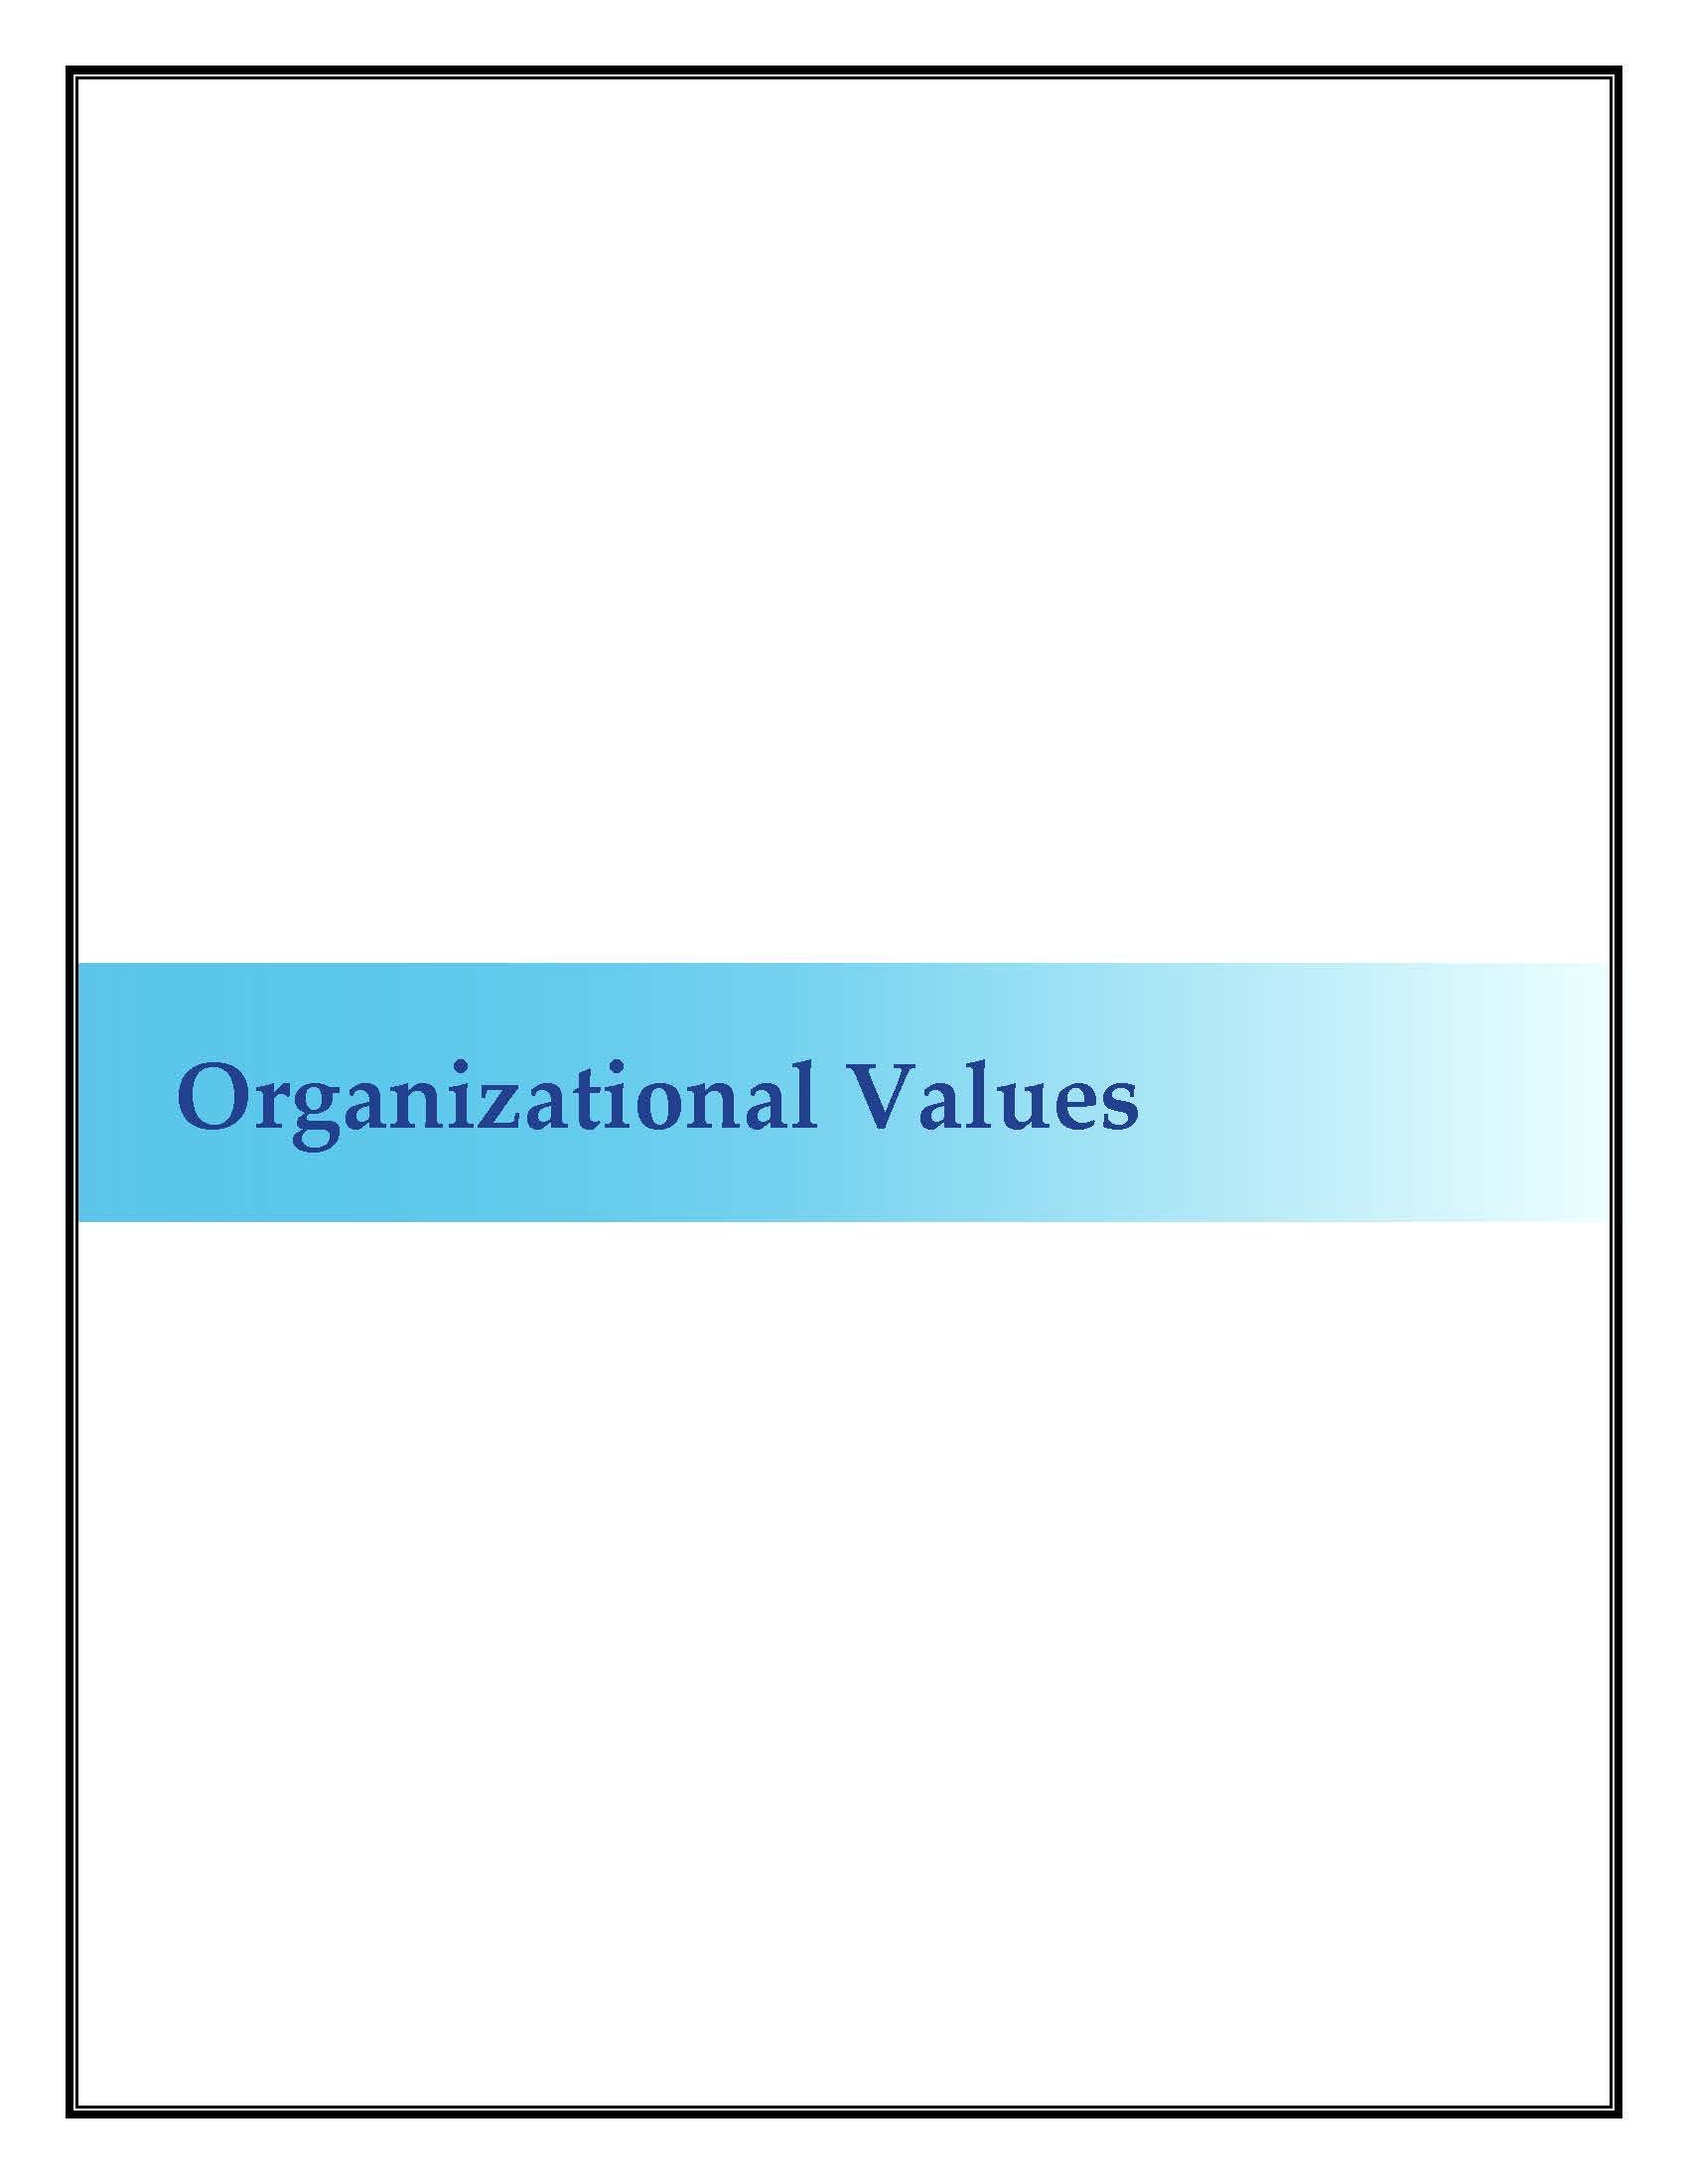 Organizational Values #2_Page_1.jpg